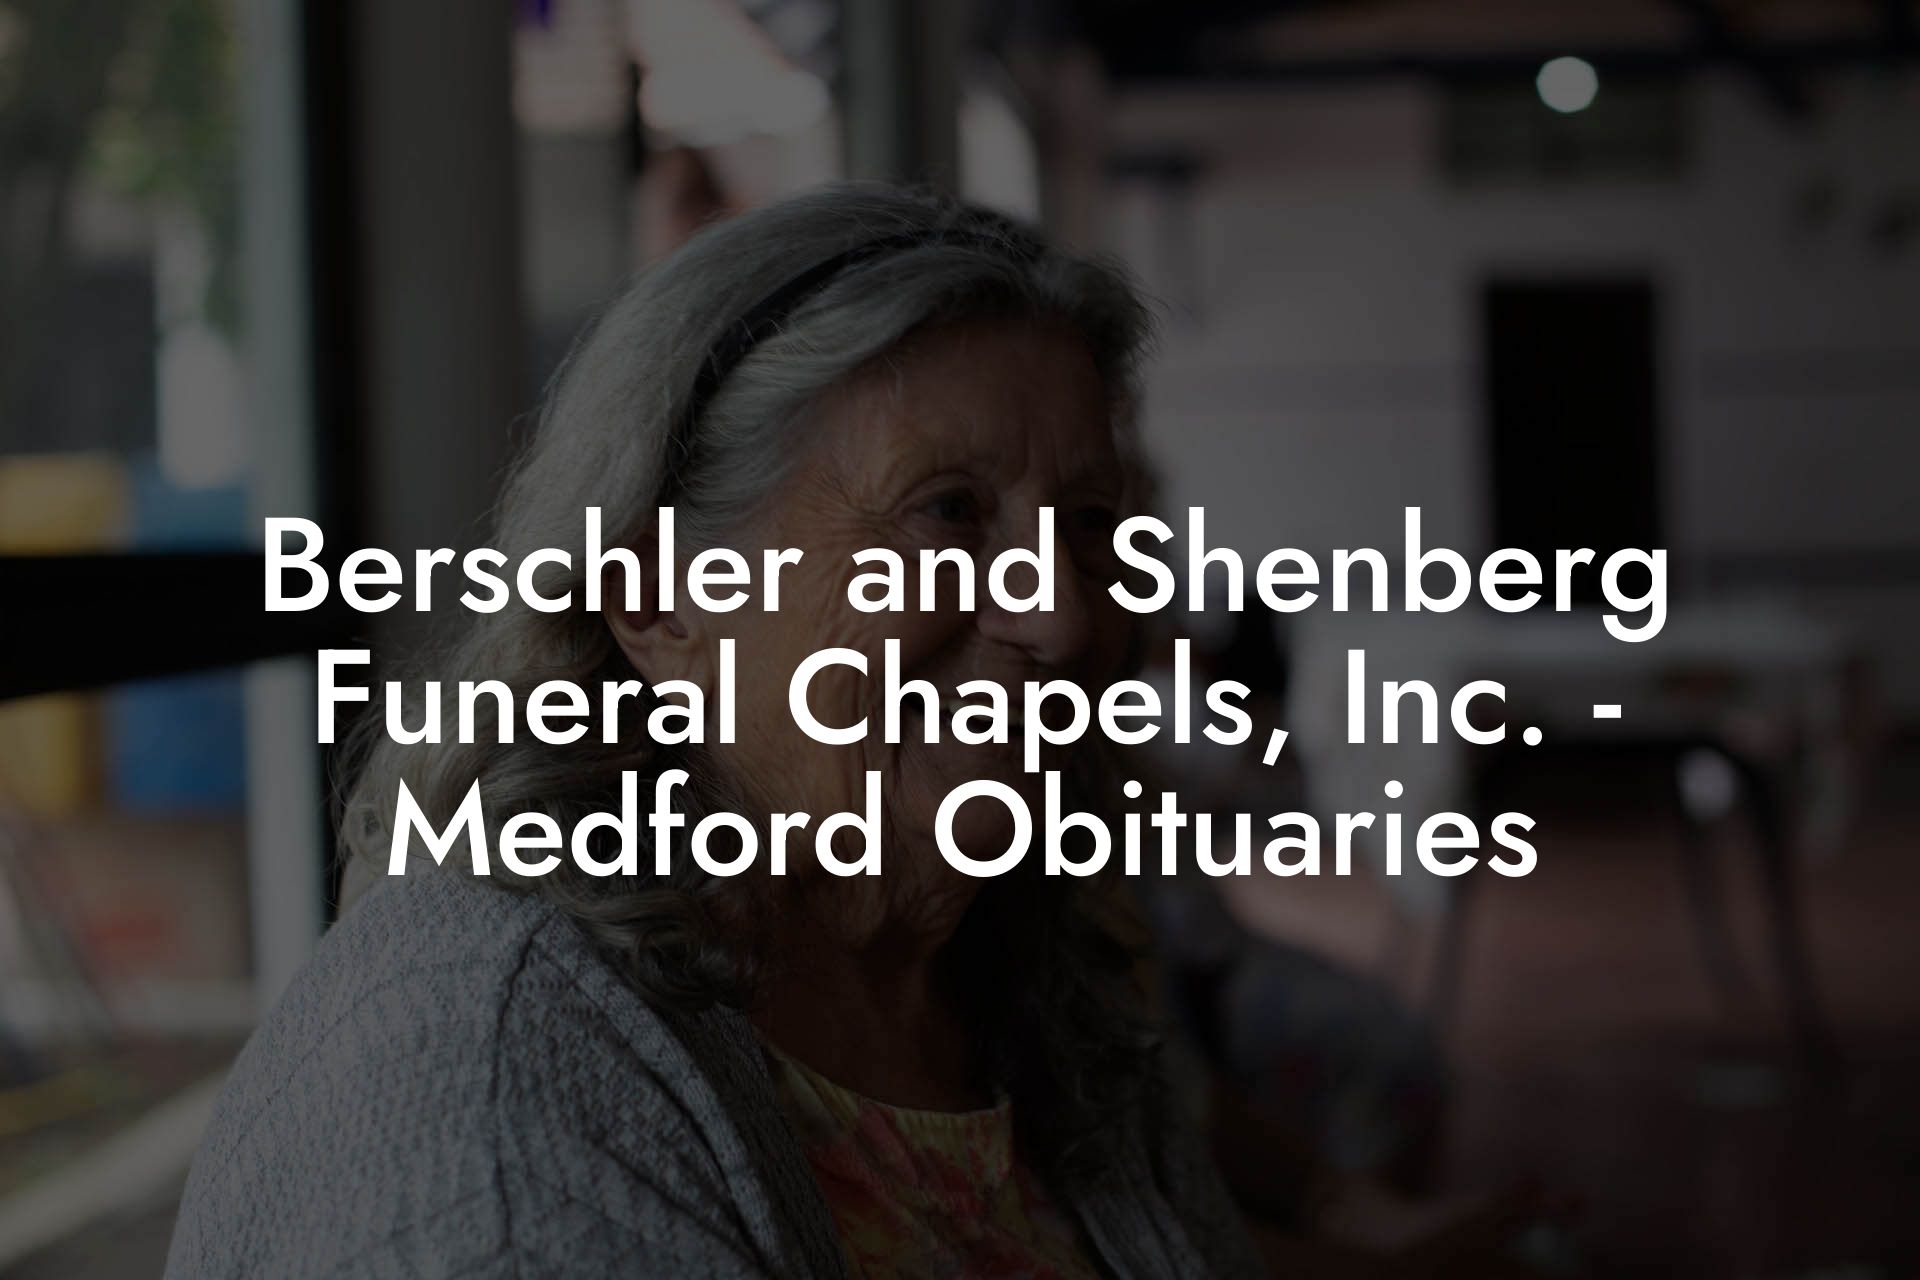 Berschler and Shenberg Funeral Chapels, Inc. - Medford Obituaries